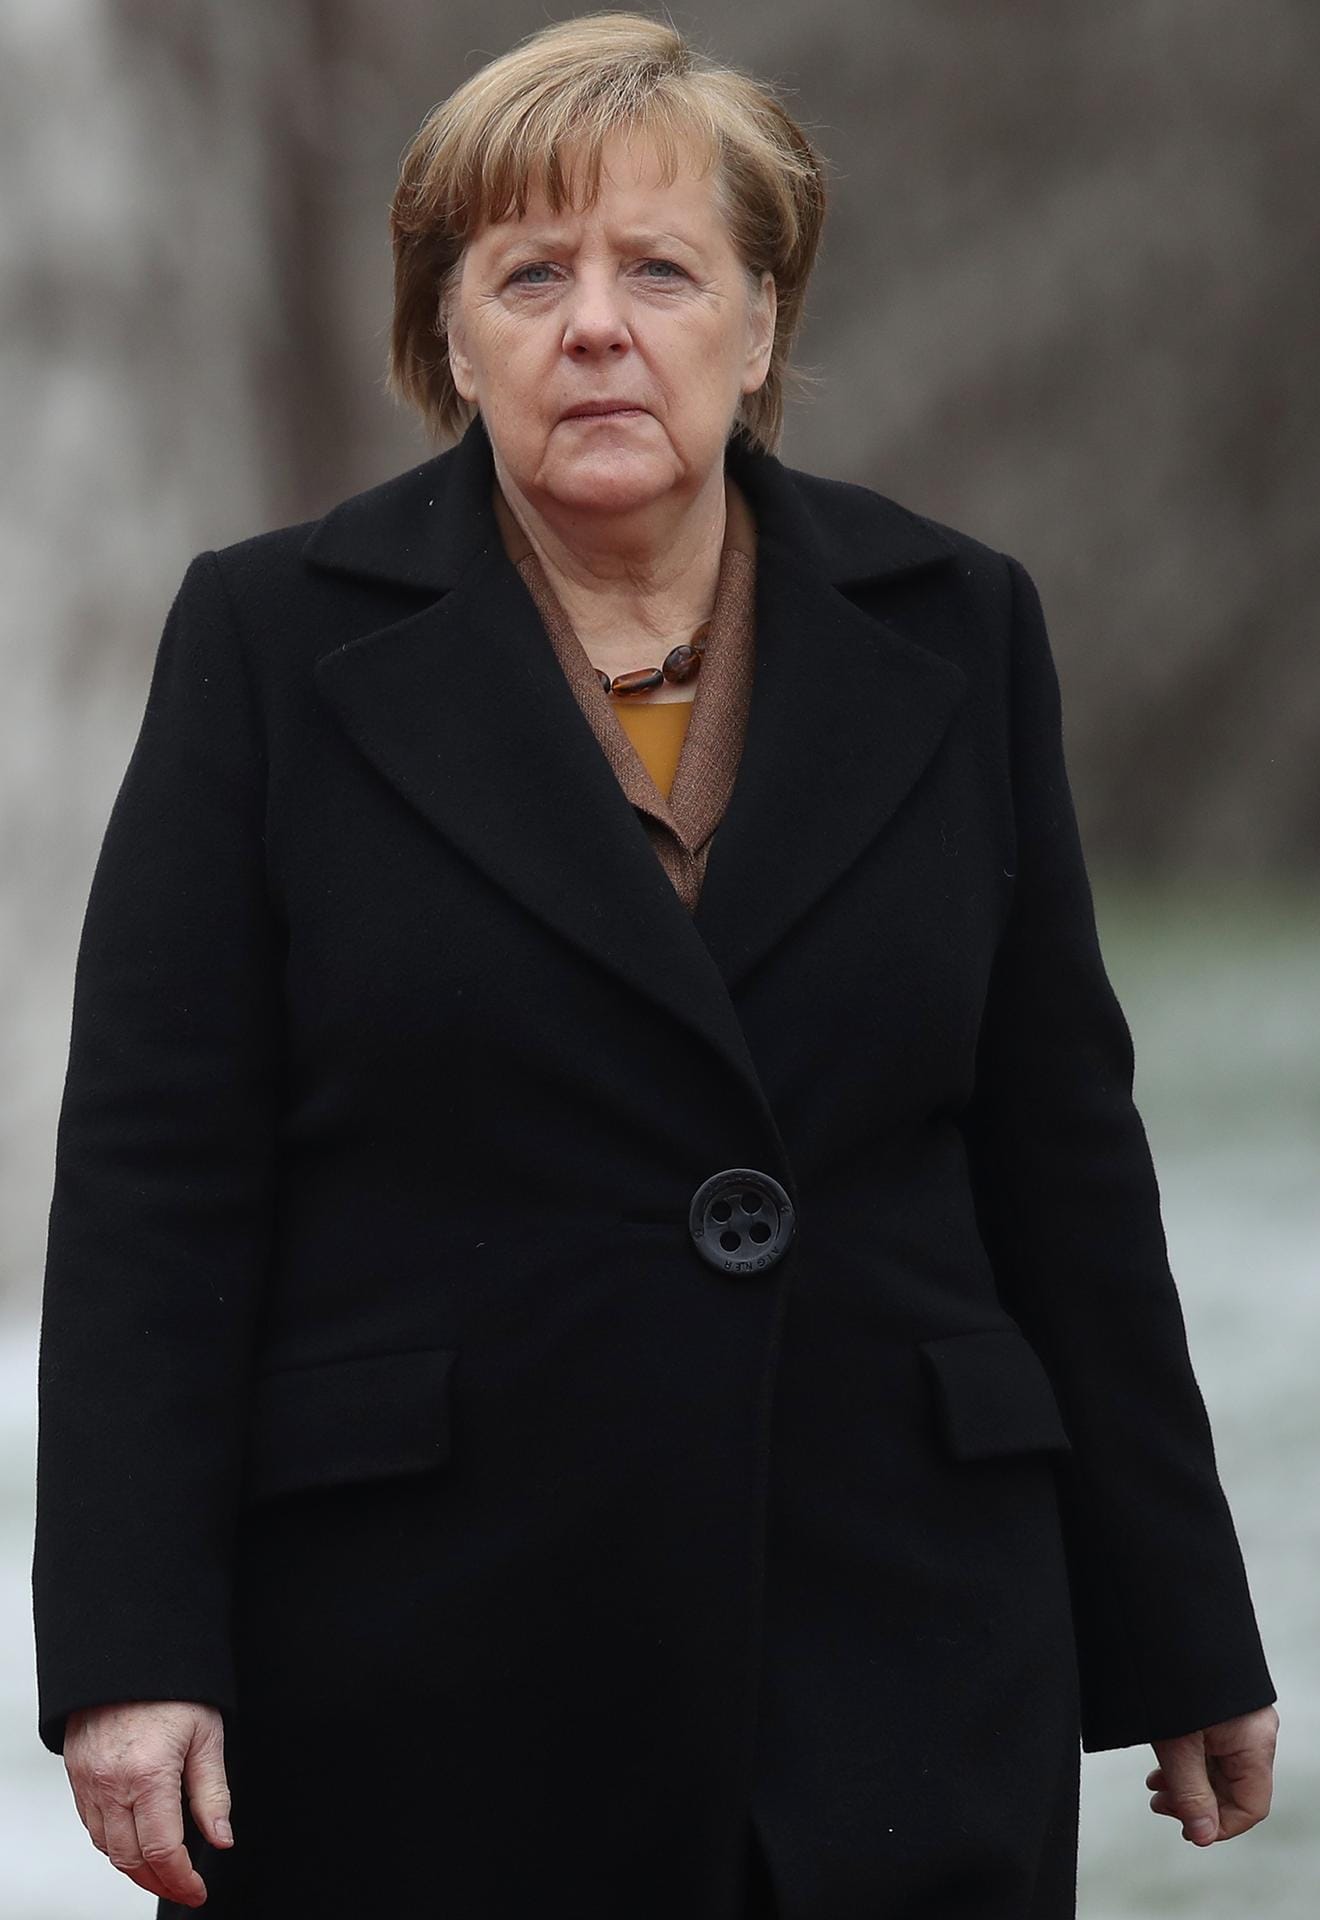 Angela Merkel in Schwarz.